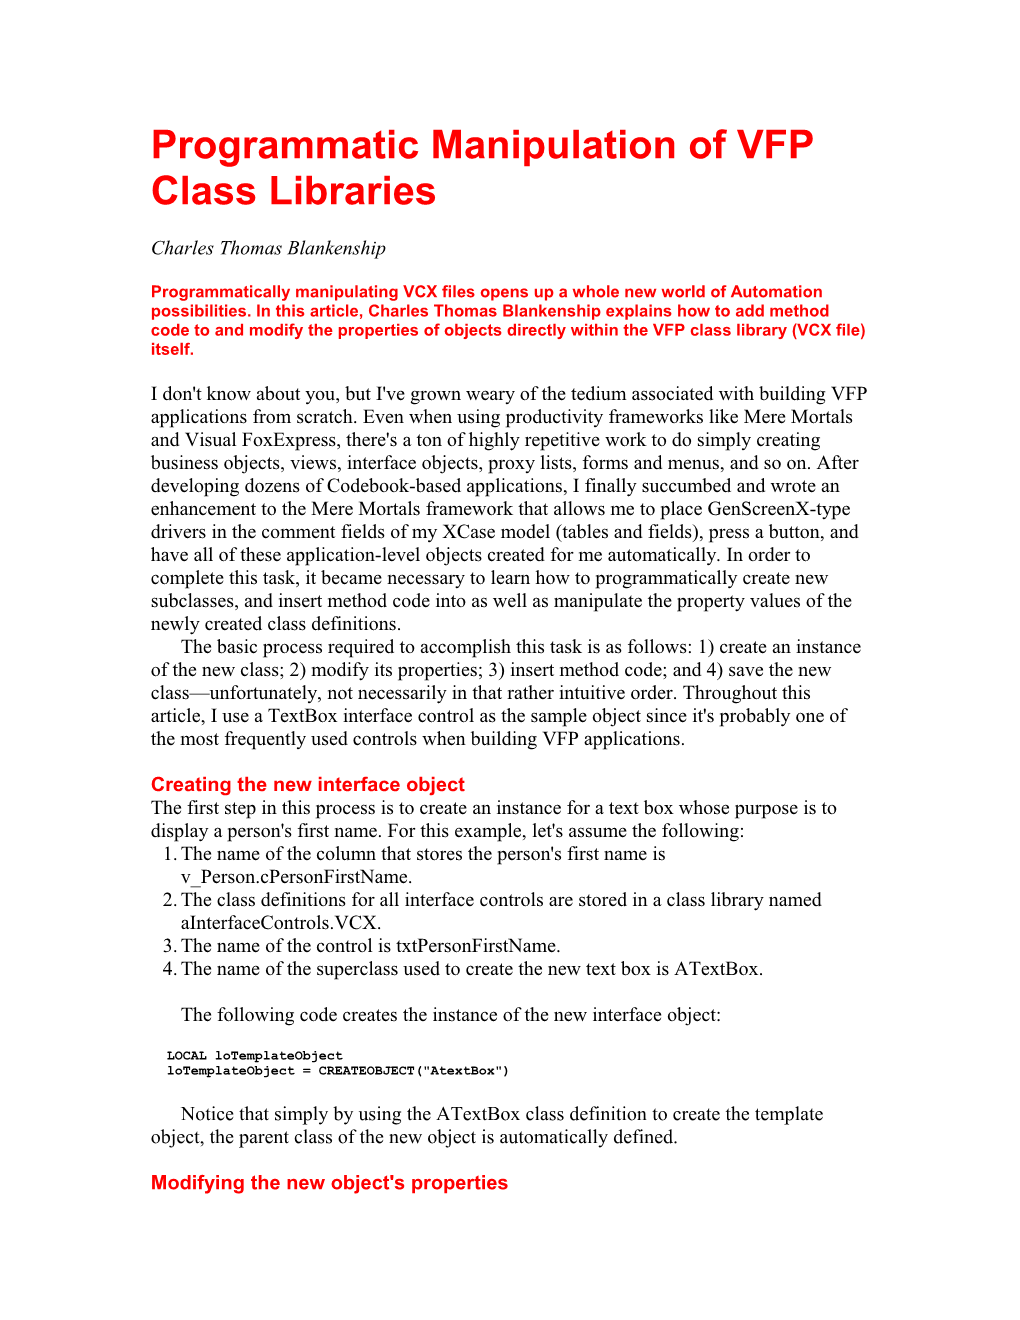 Programmatic Manipulation of VFP Class Libraries